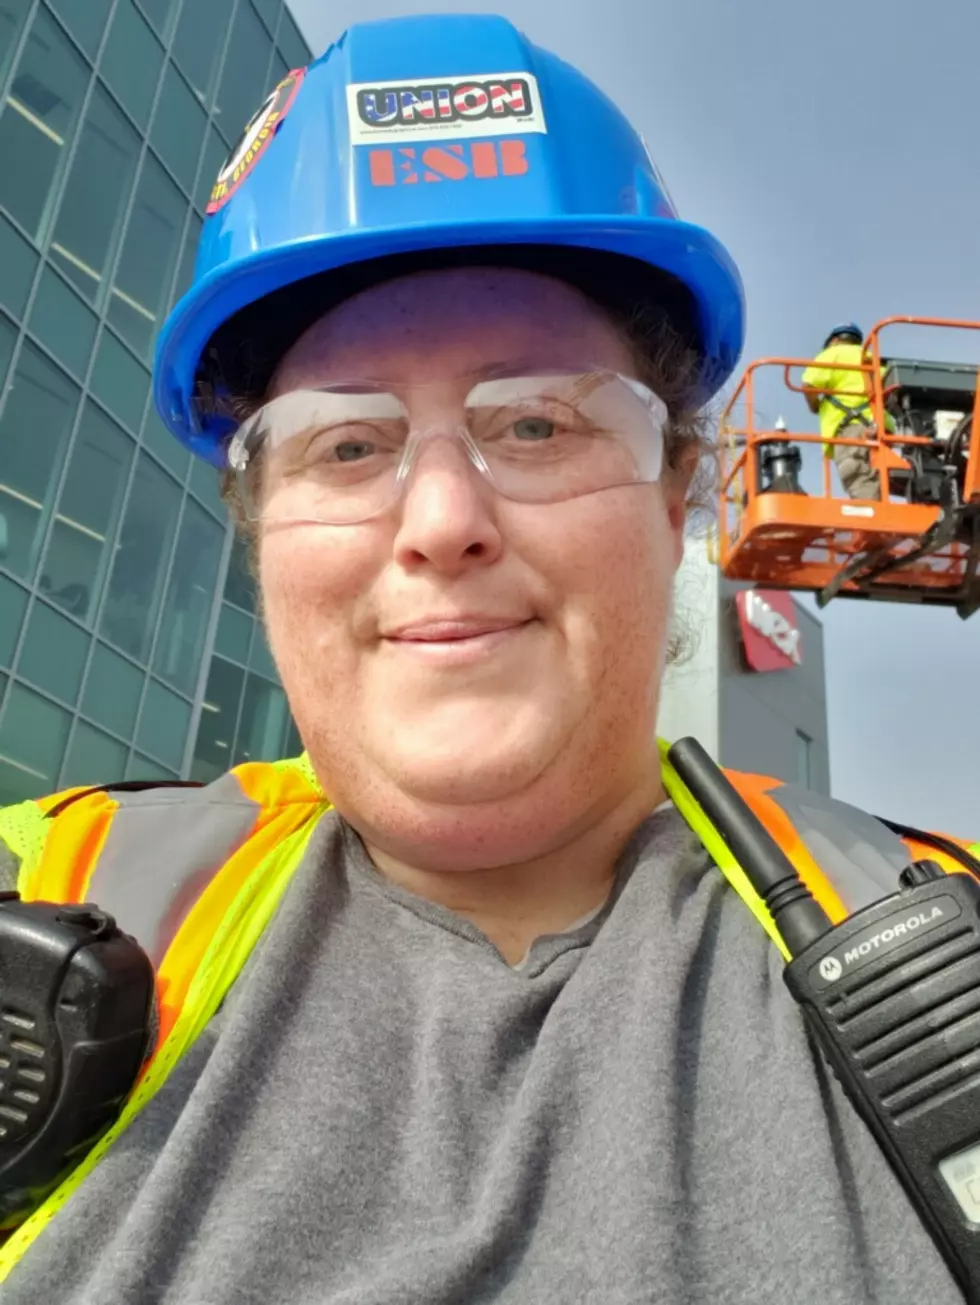 Maine Celebrates Women in Construction Week